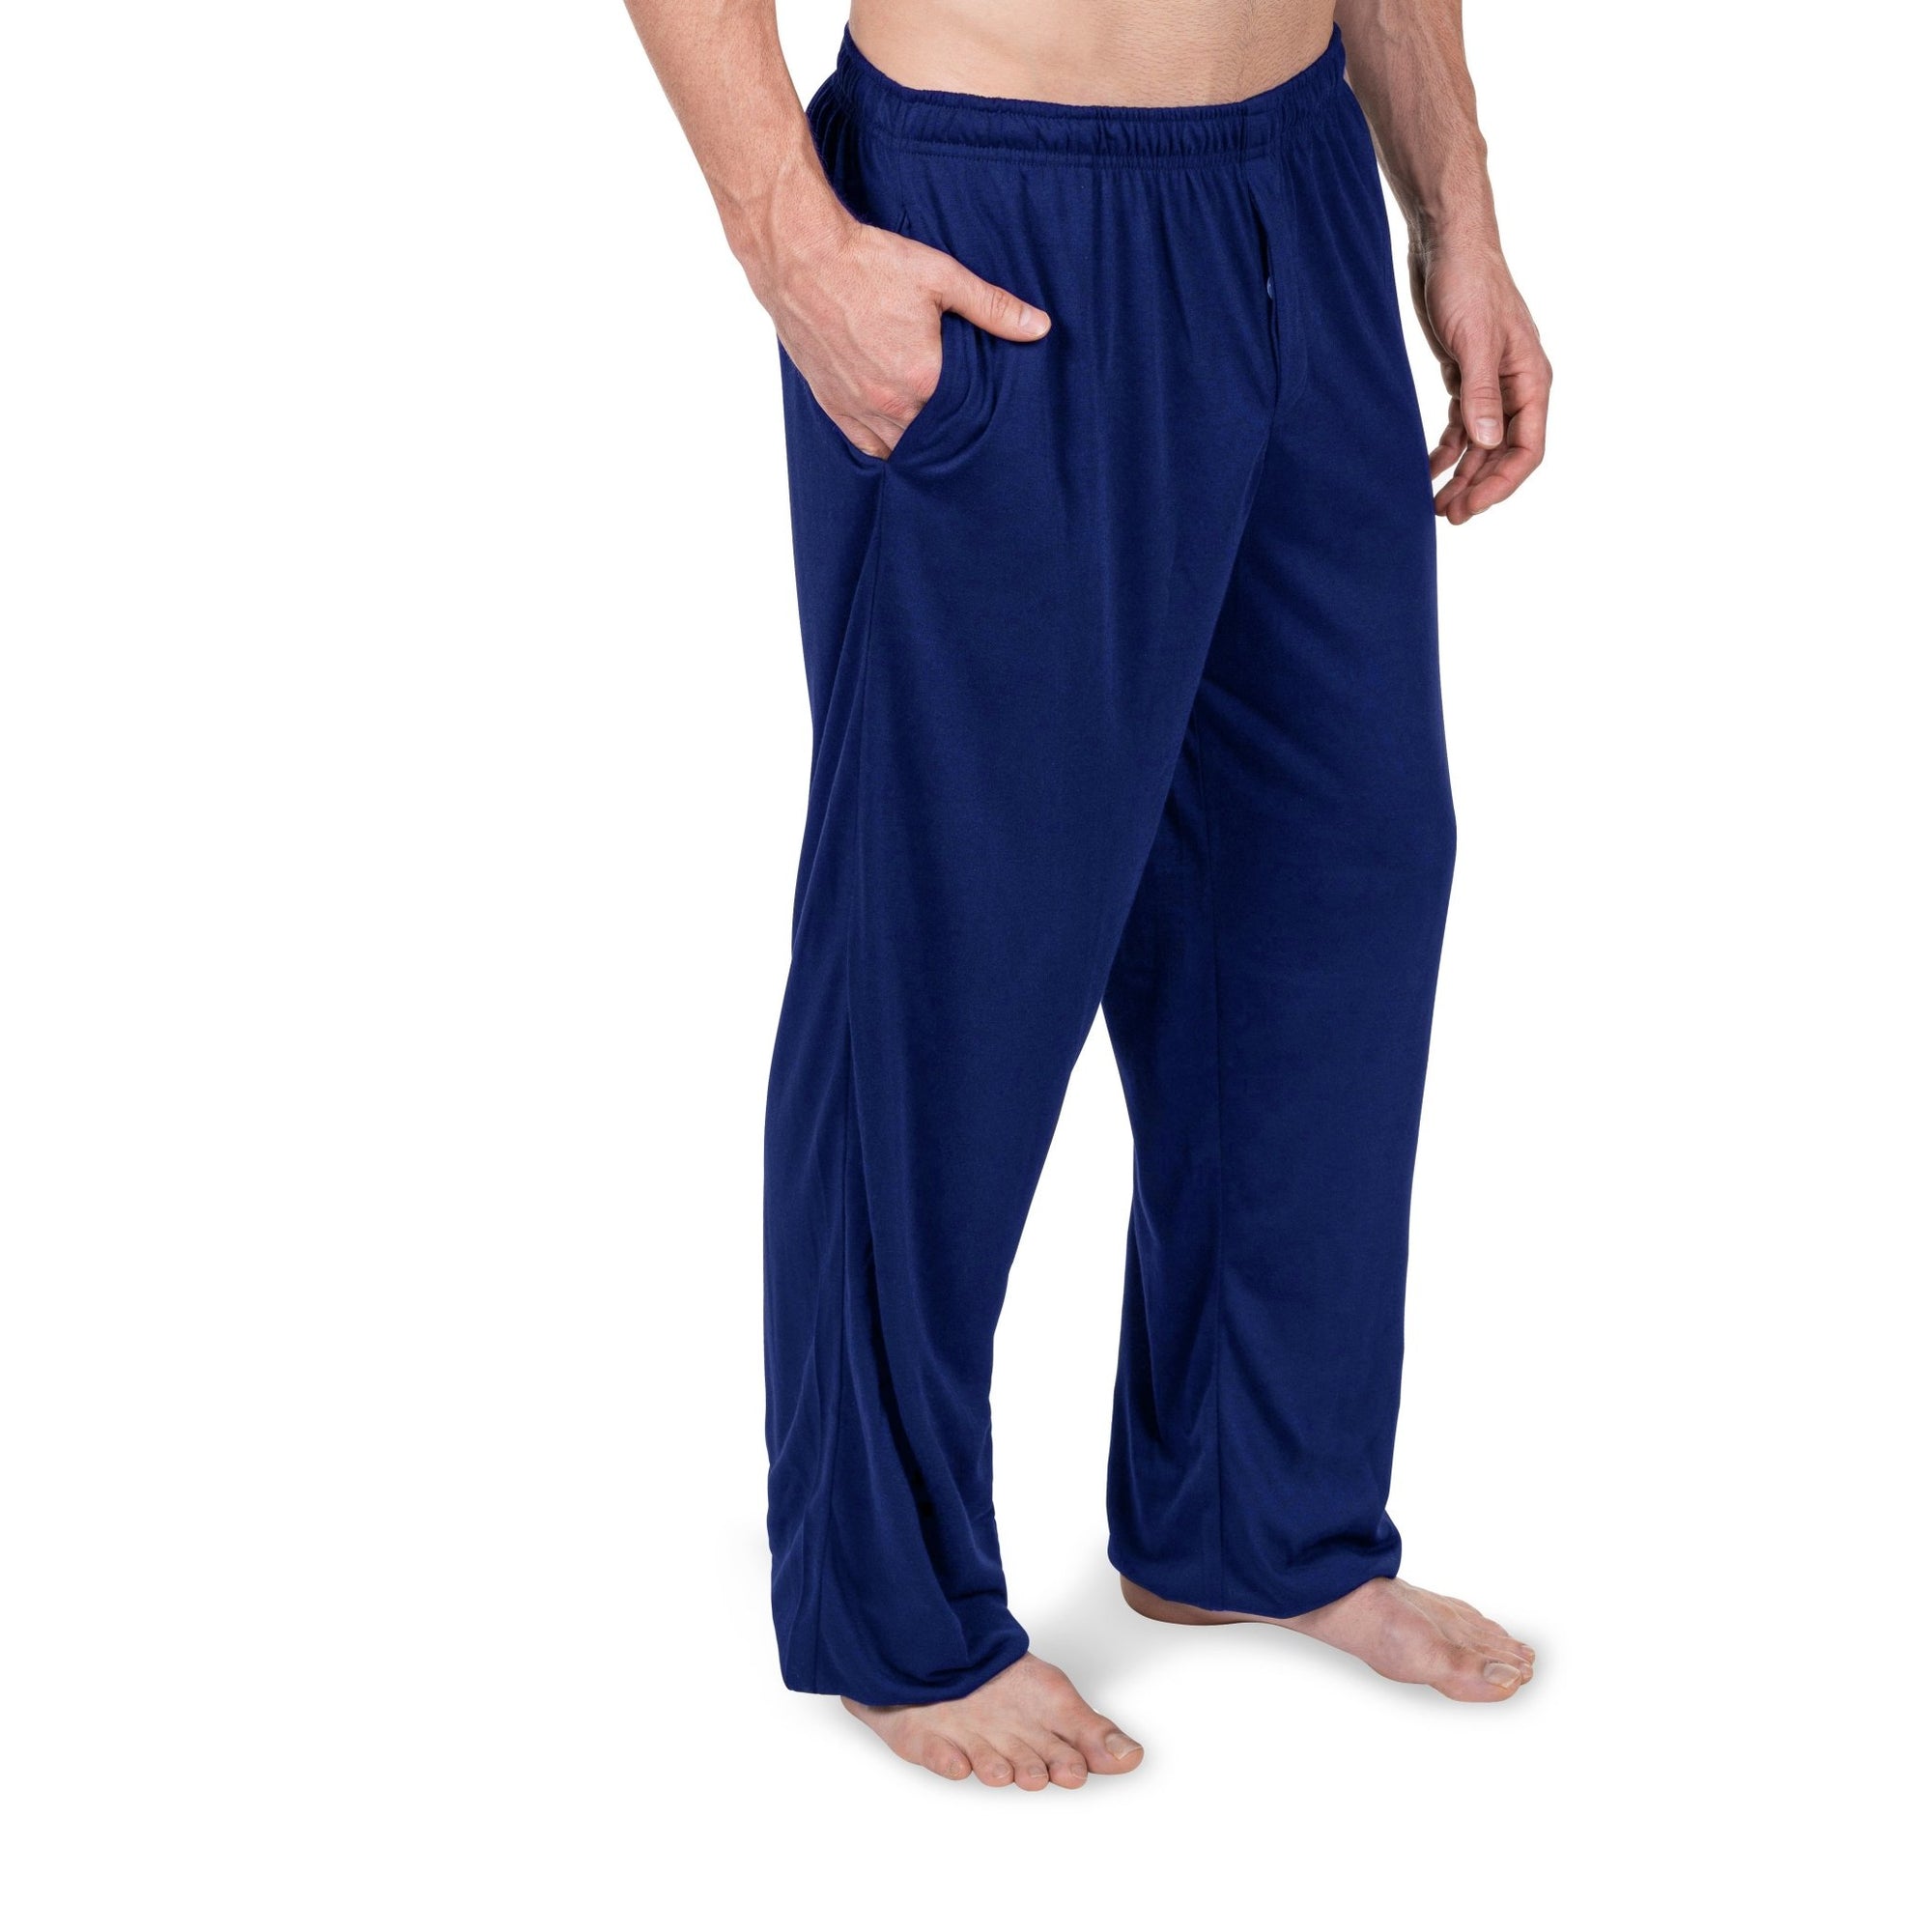 Men's Moisture-Wicking Pants | Men's Pajamas For Night Sweats - Cool-jams